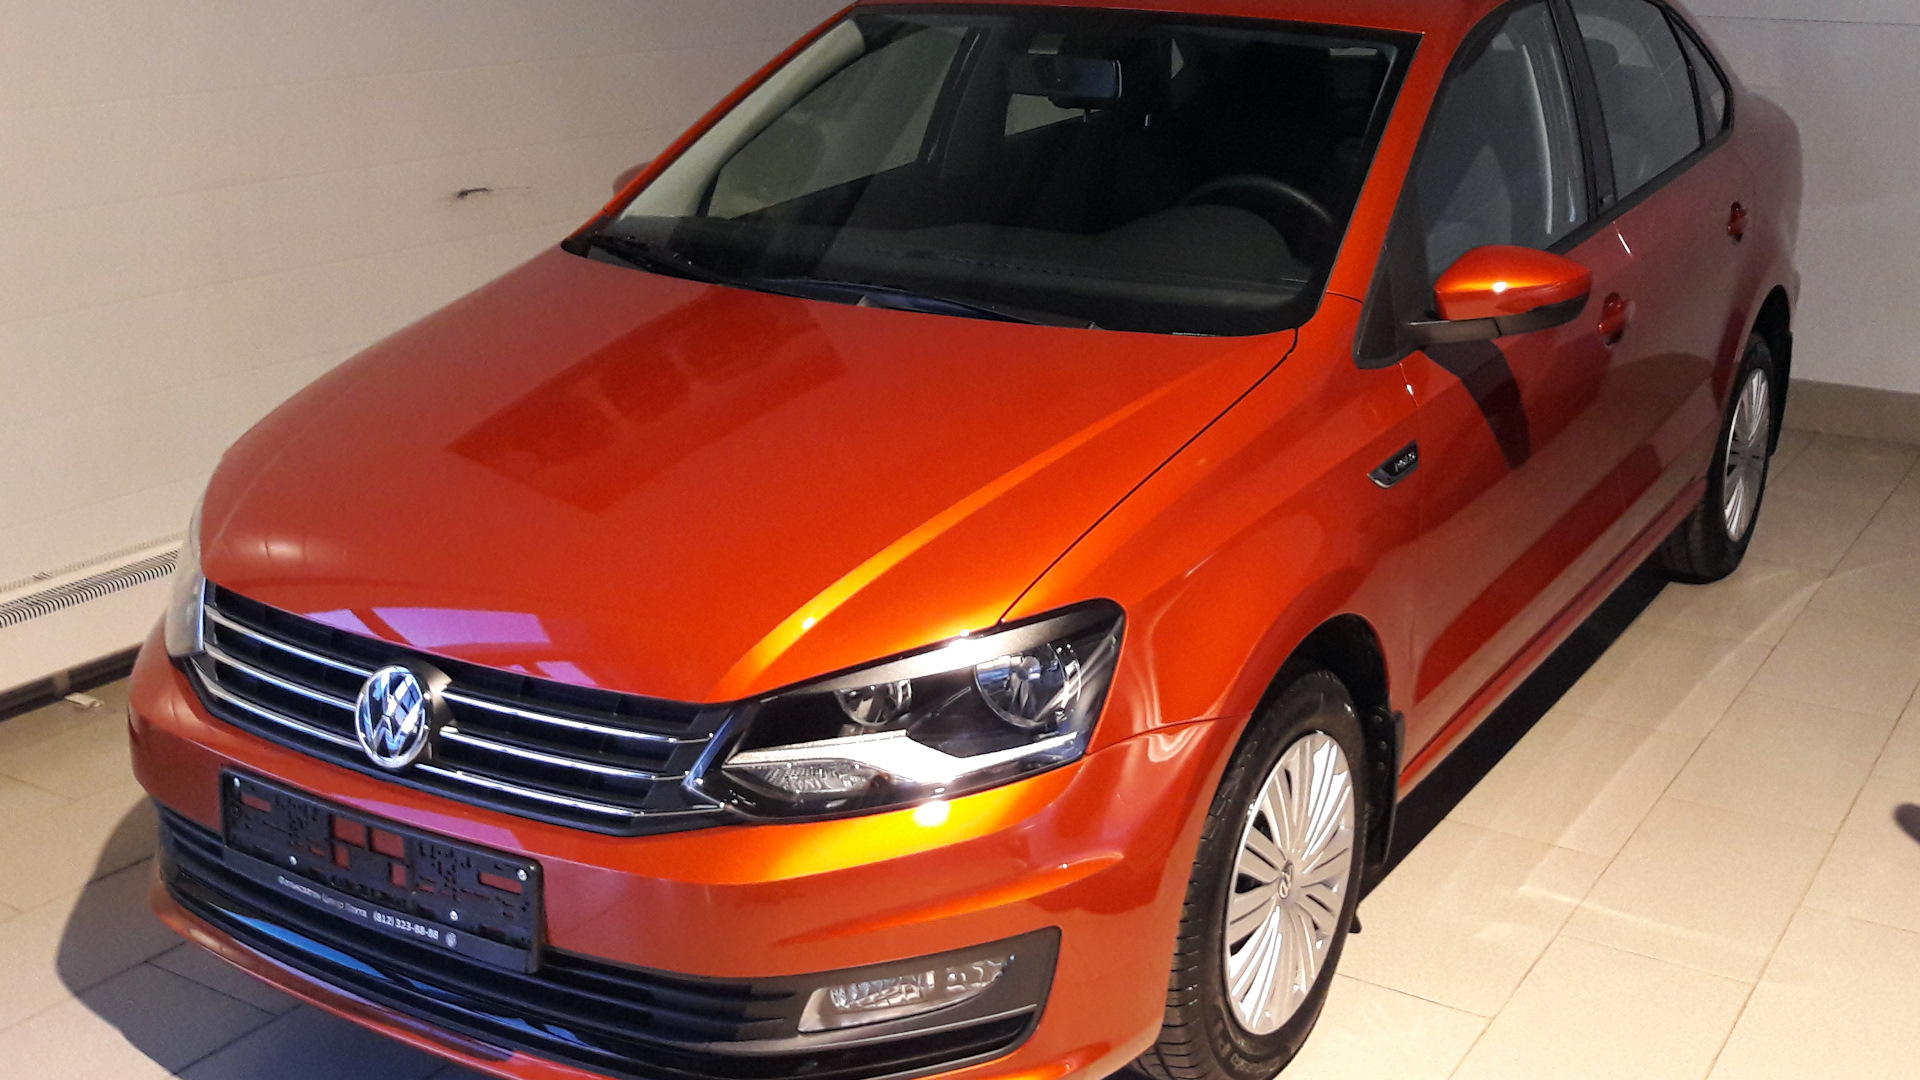 Volkswagen Polo Sedan 1.6 бензиновый 2017 | красно-оранжевый металик на  DRIVE2